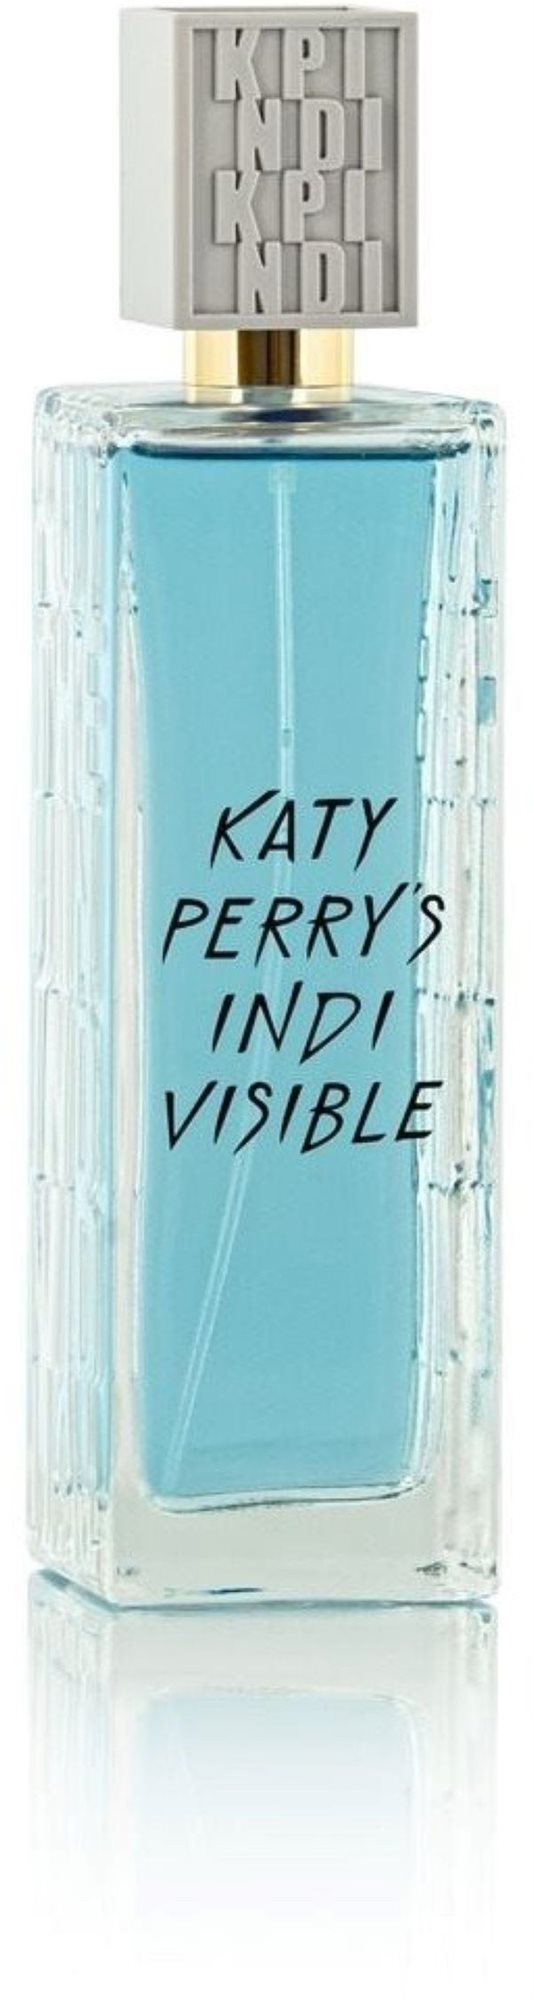 KATY PERRY Katy Perry's Indi Visible EdP